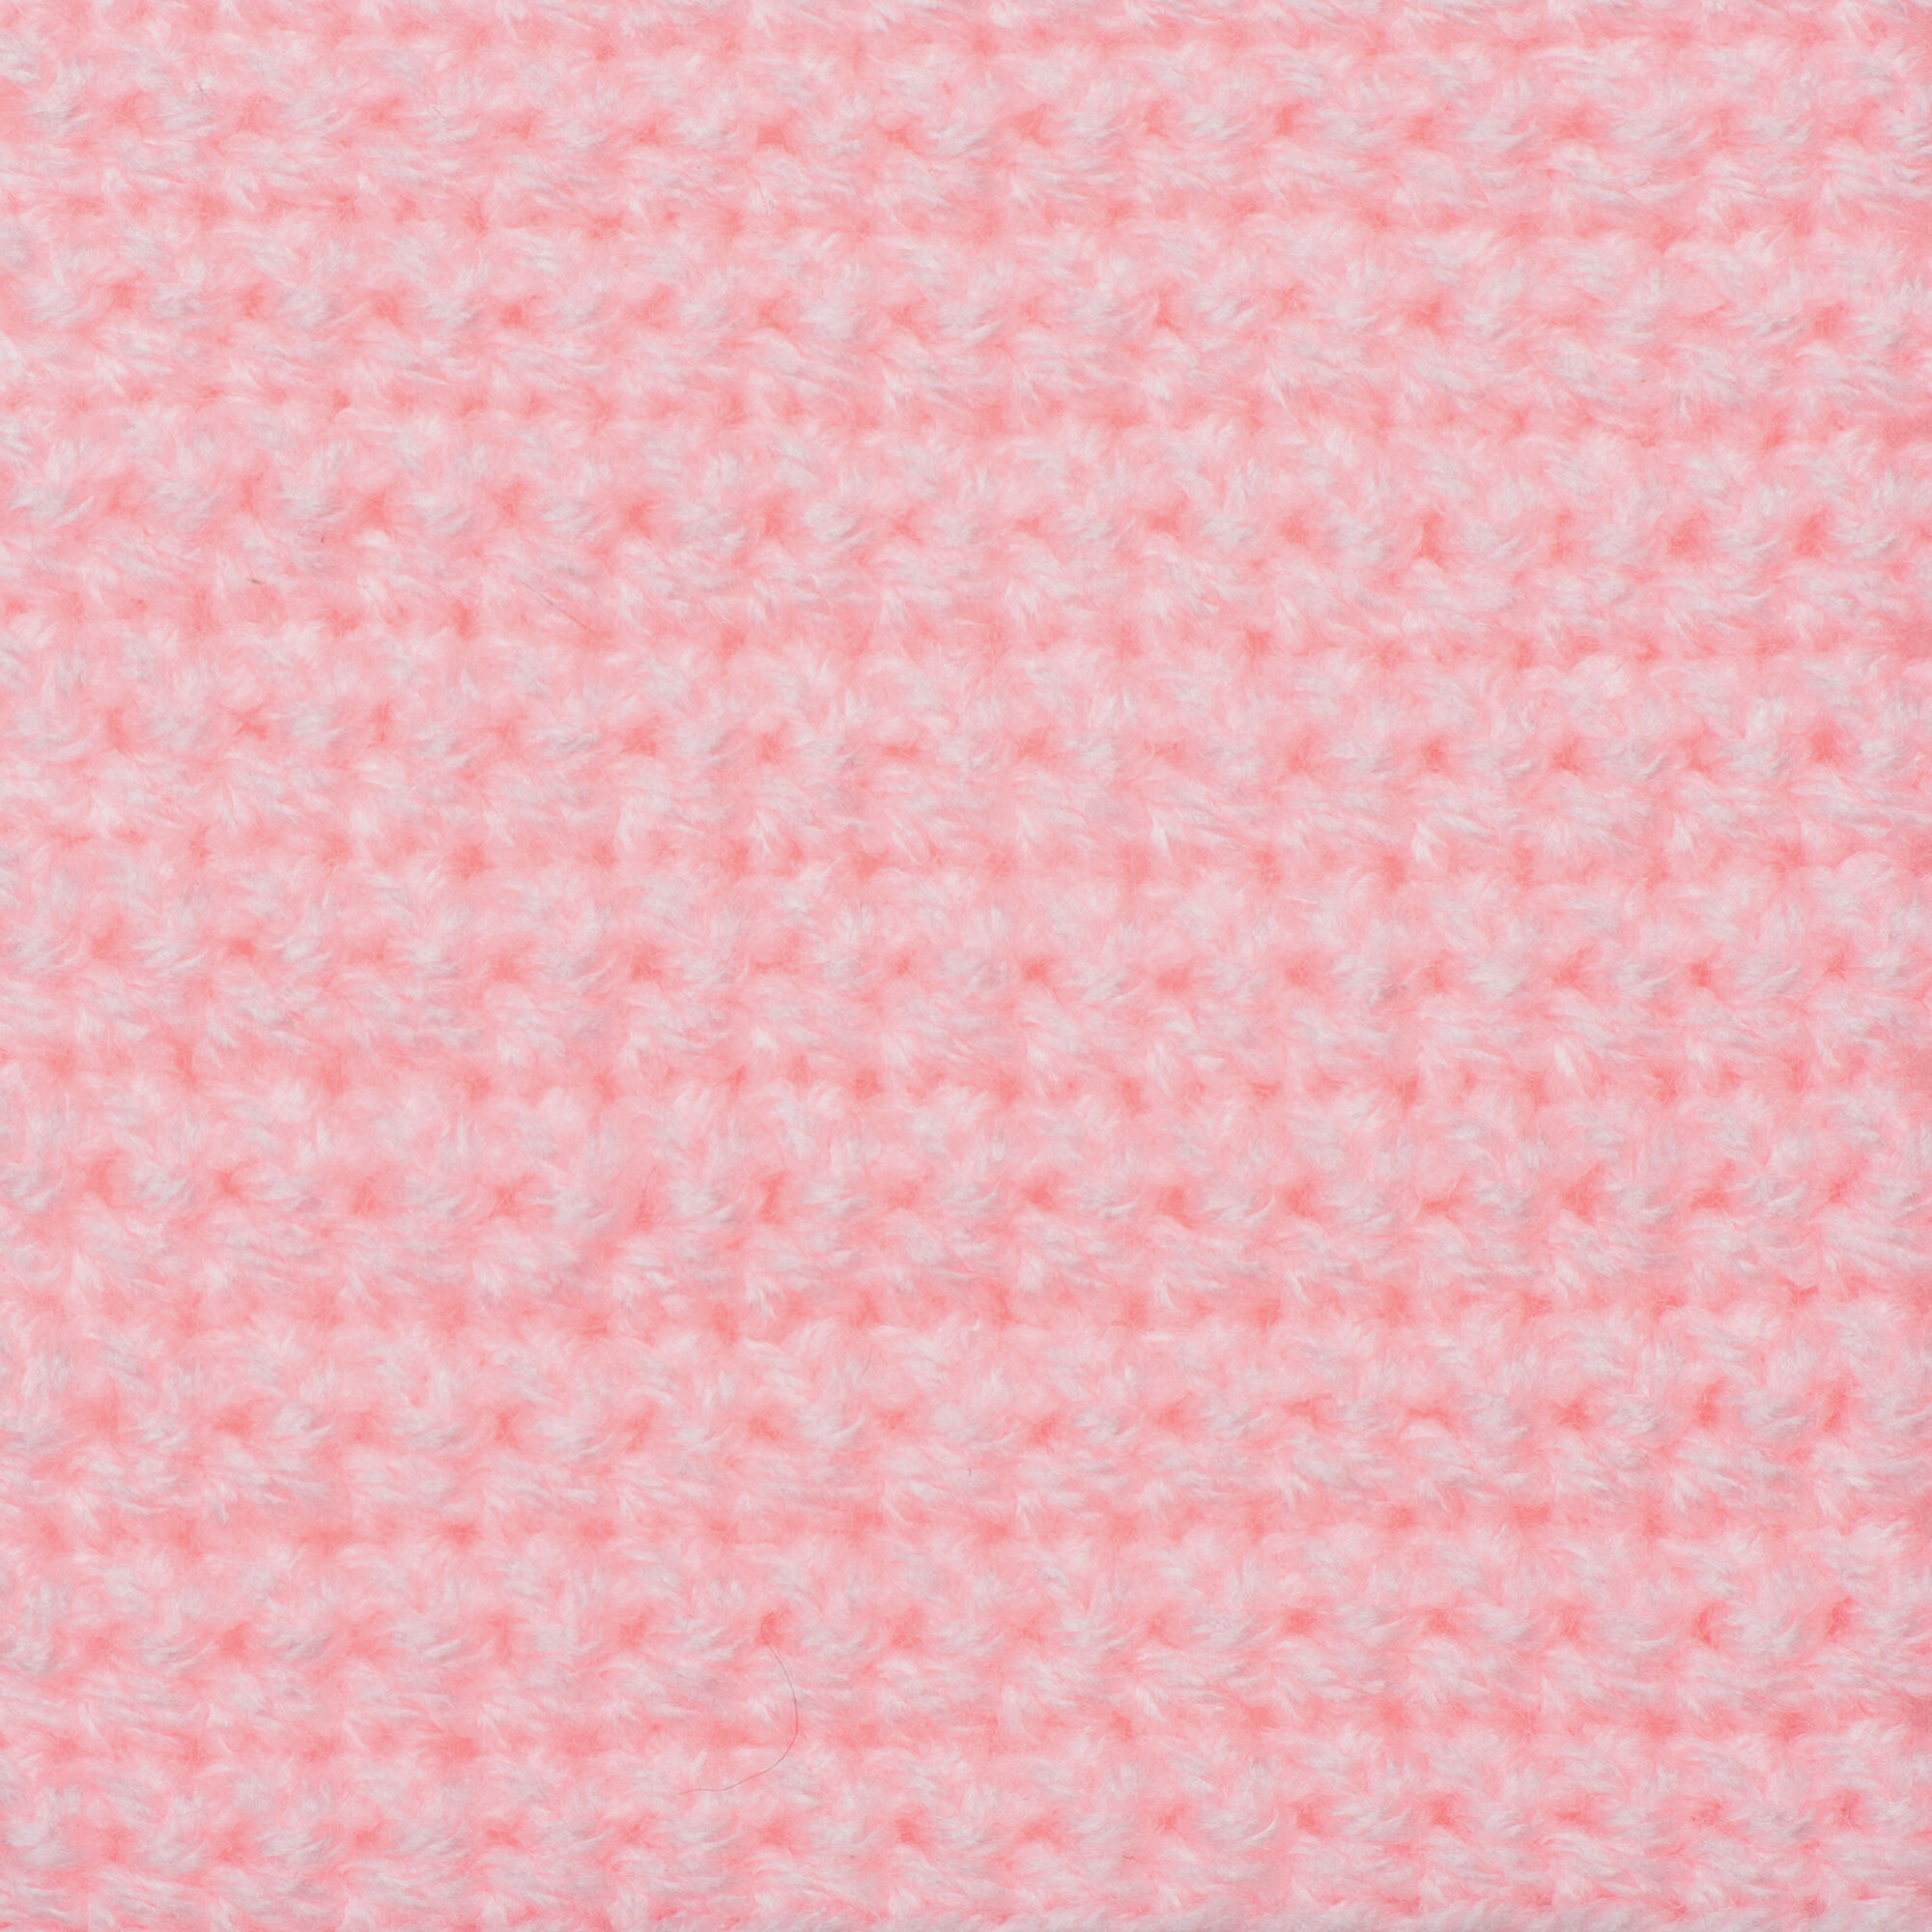 Red Heart Super Saver Yarn, Perfect Pink, 7oz(198g), Medium, Acrylic - image 4 of 16